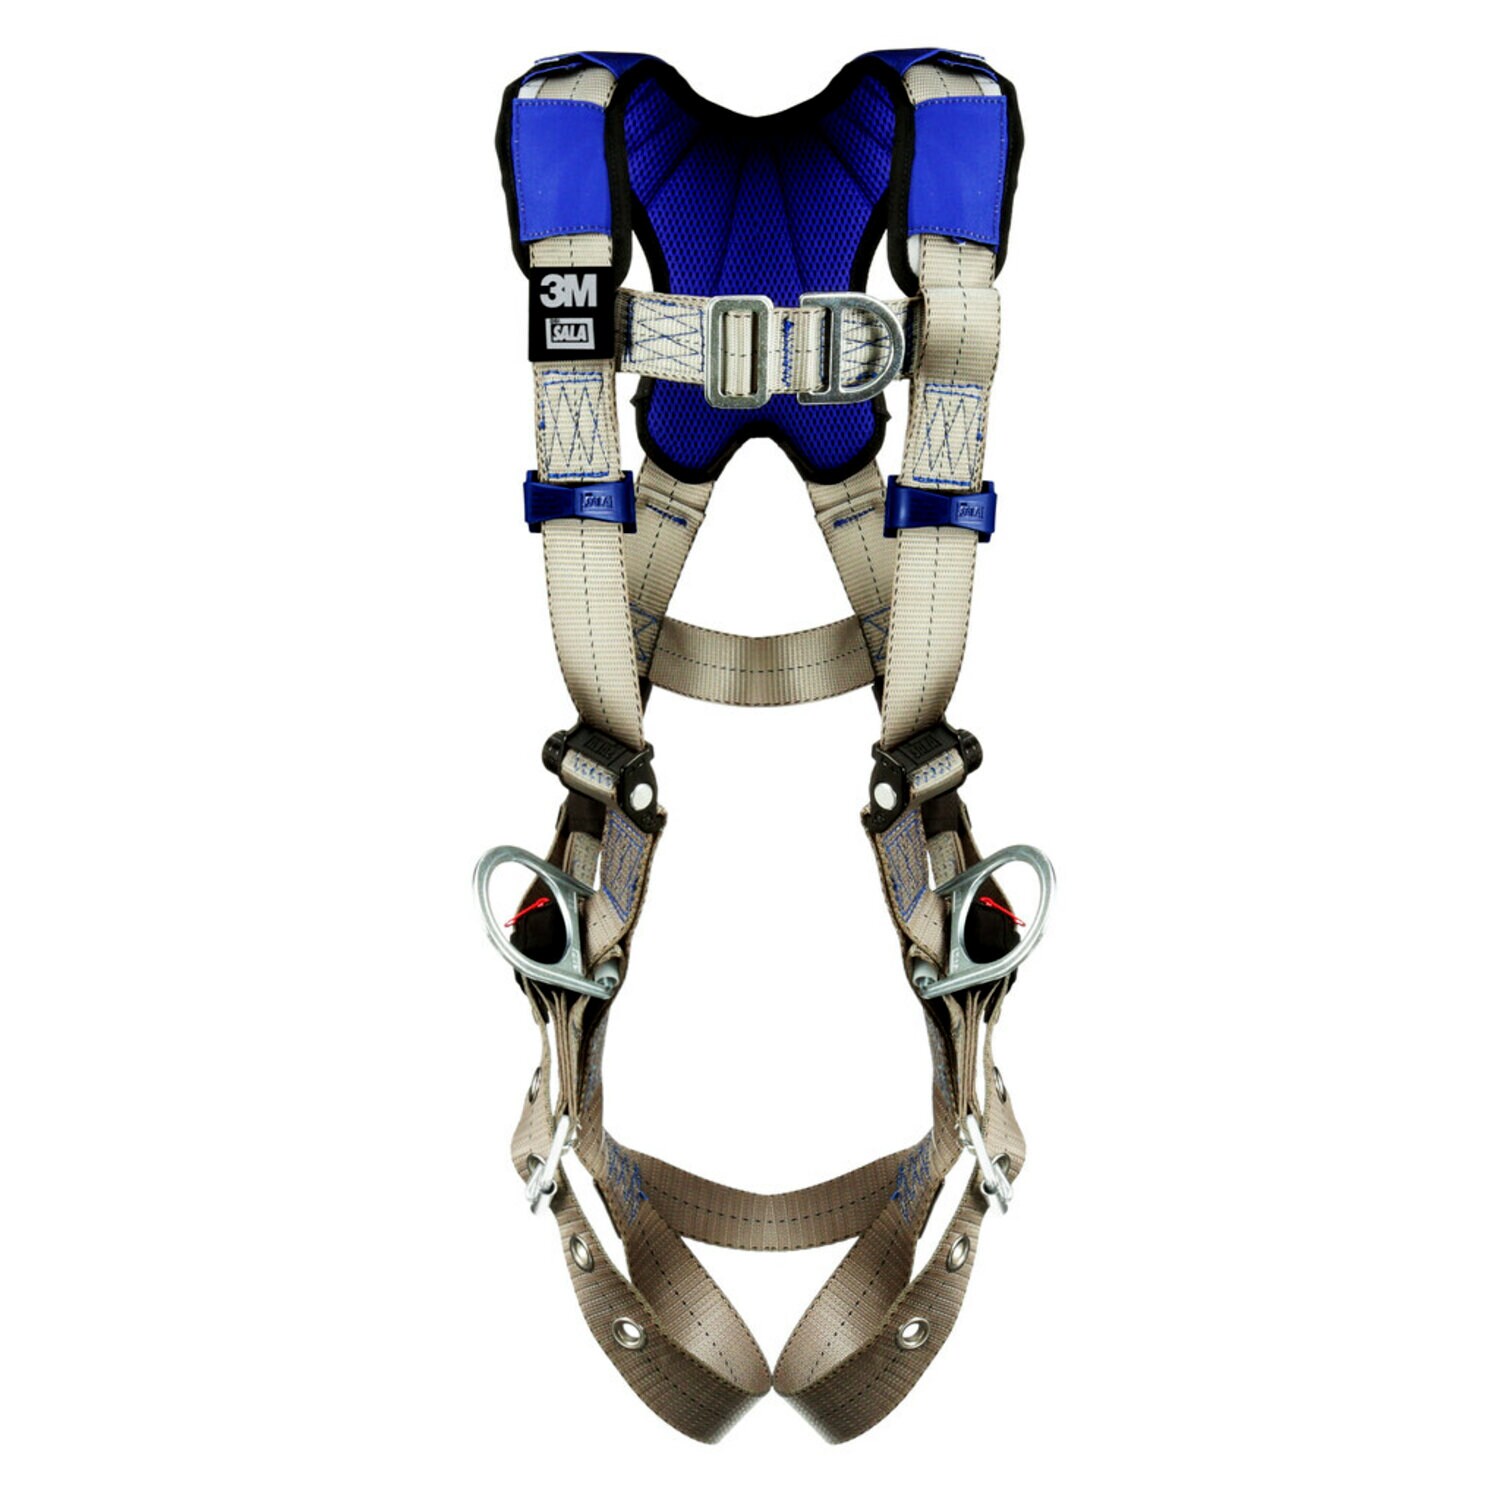 7012817467 - 3M DBI-SALA ExoFit X100 Comfort Vest Climbing/Positioning Safety Harness 1401019, 2X